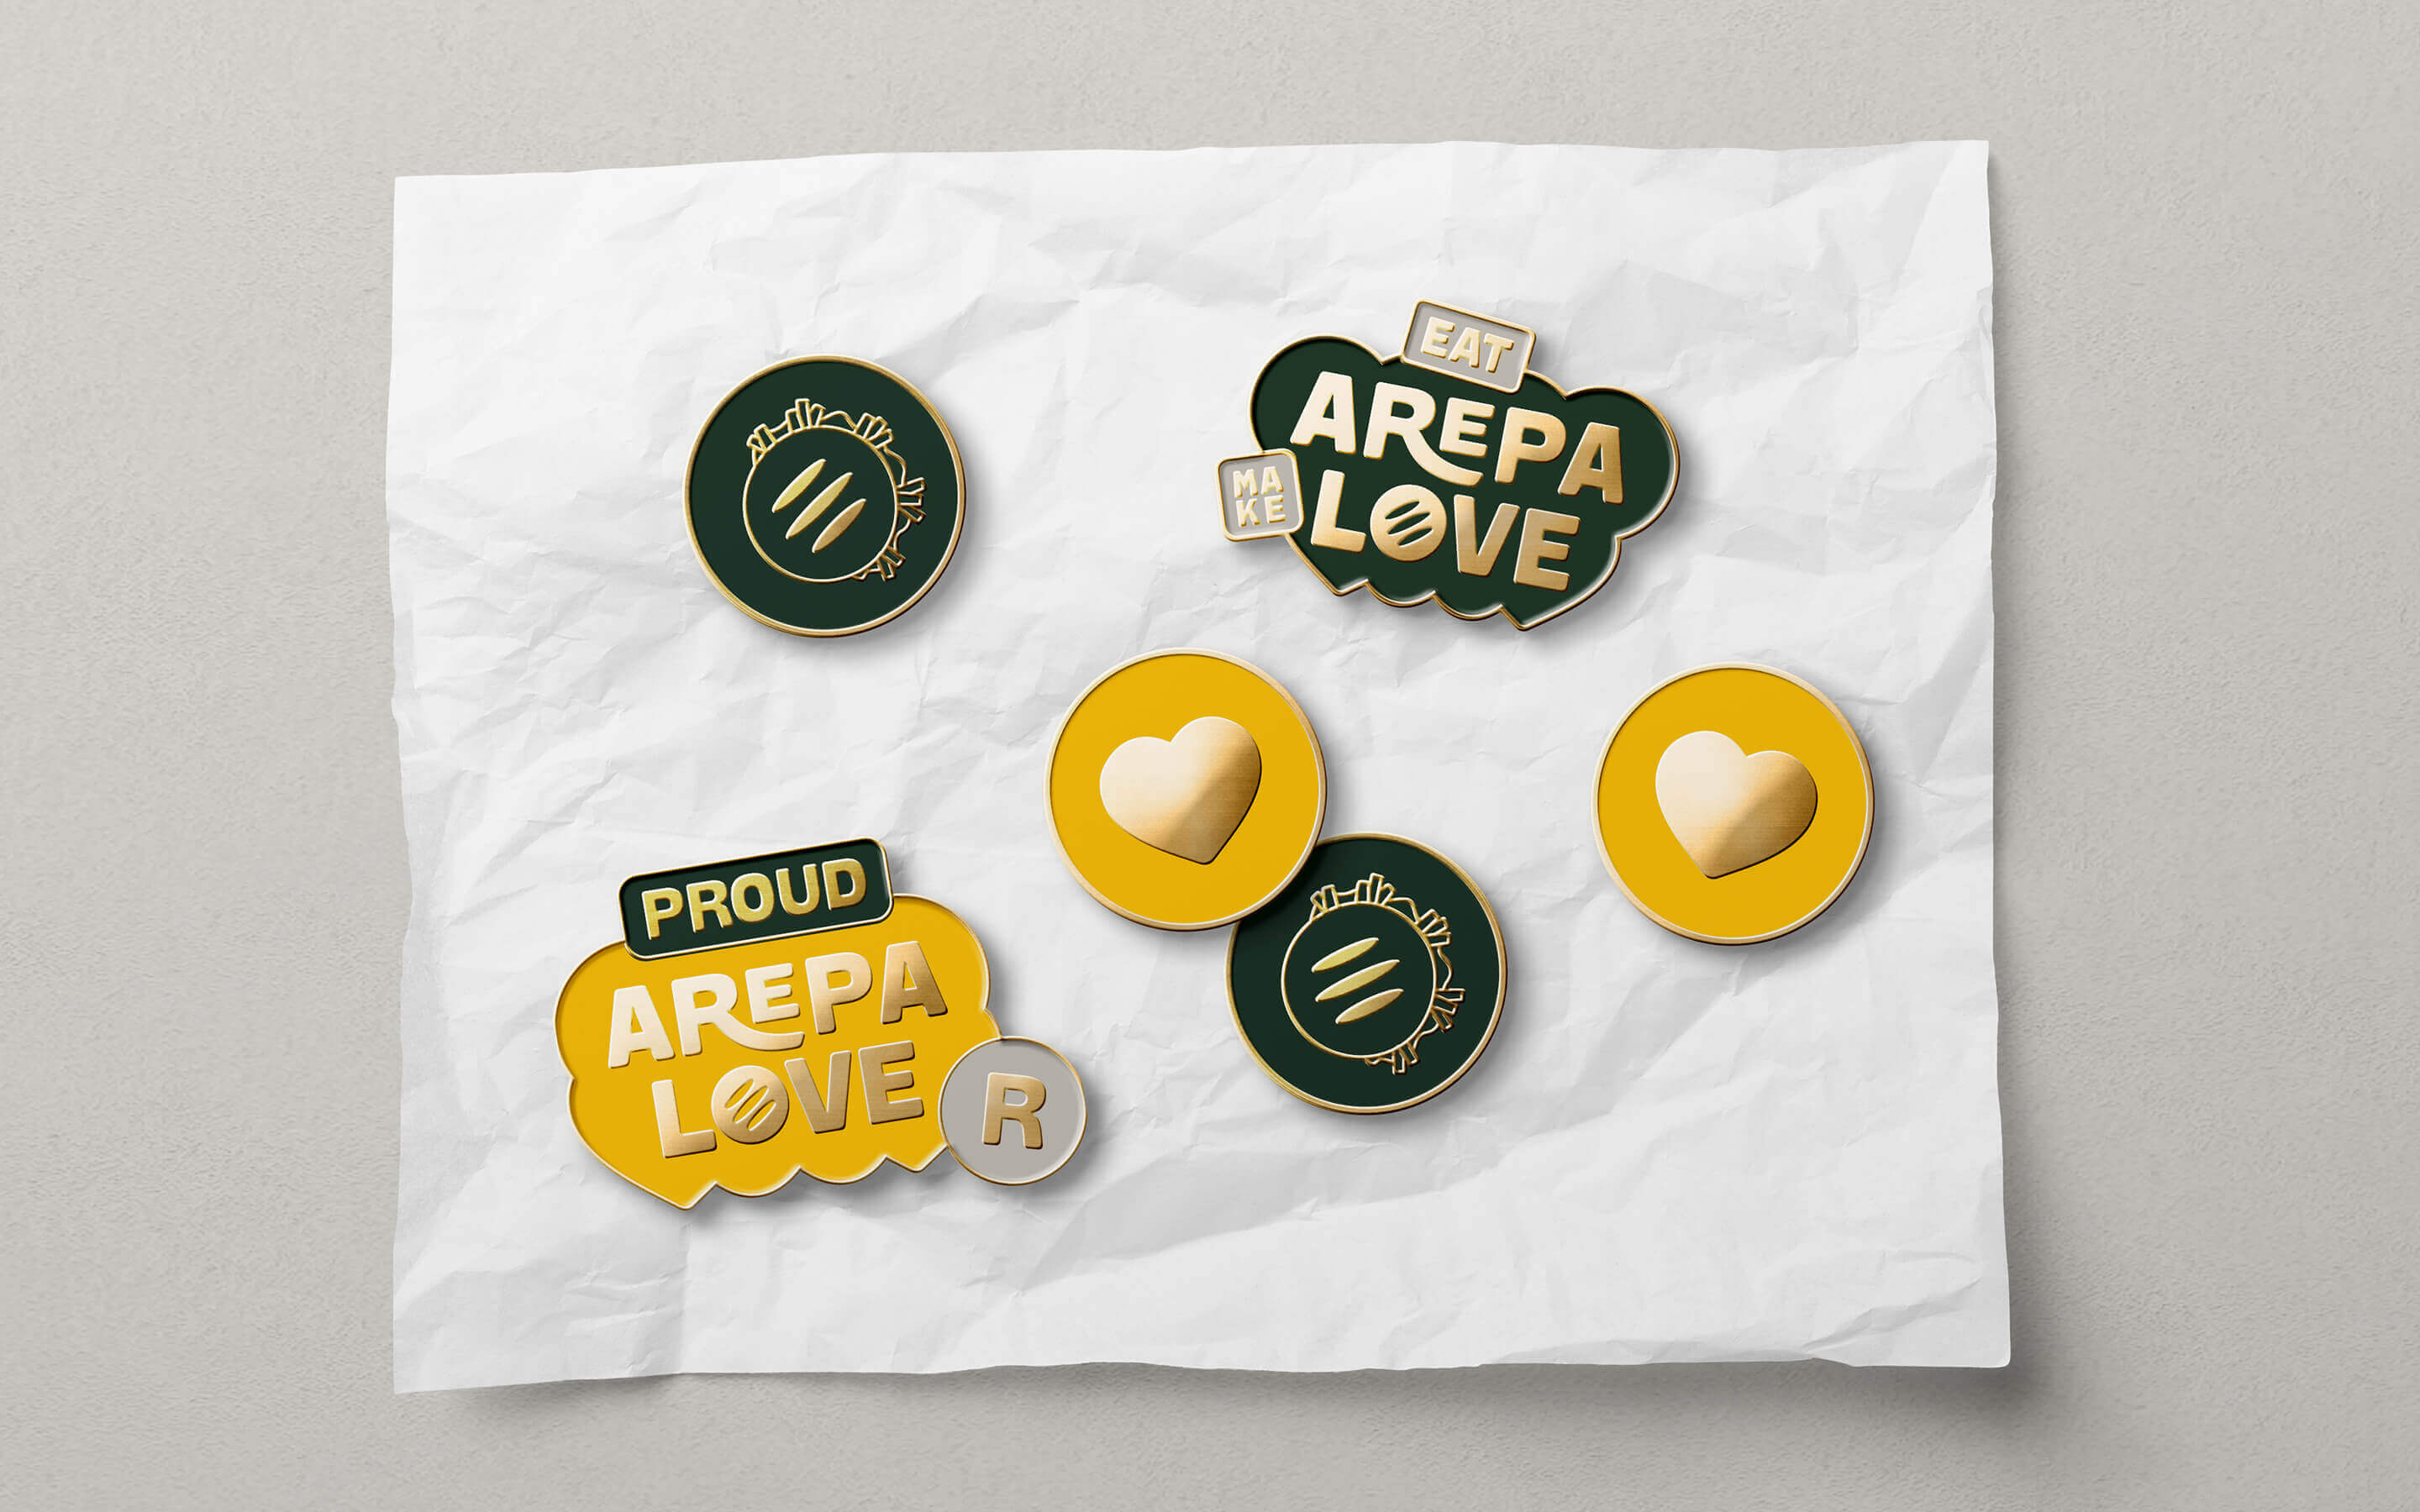 Arepa Love's custom enamel pins.